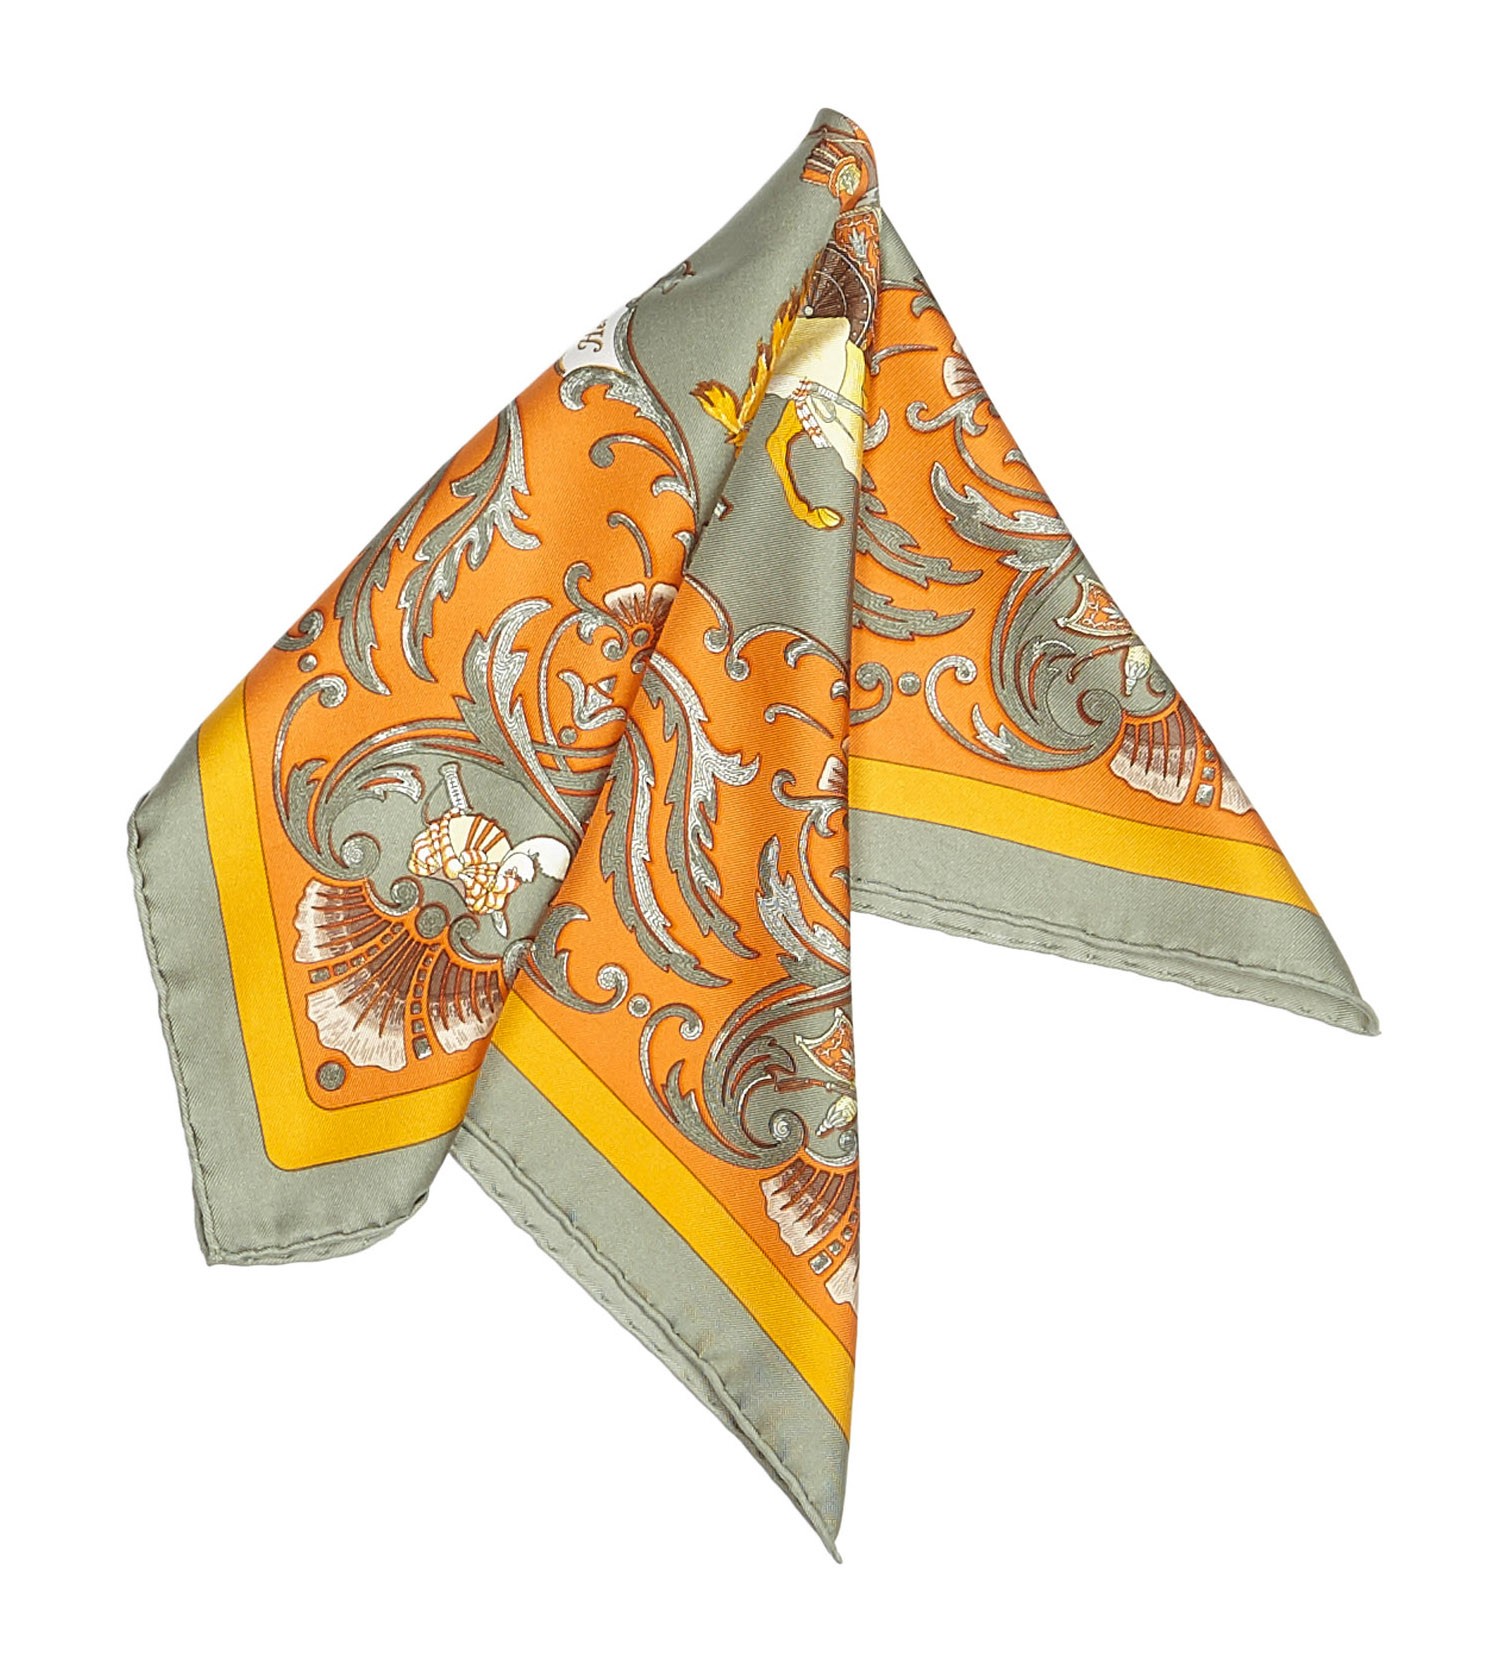 hermes orange silk scarf